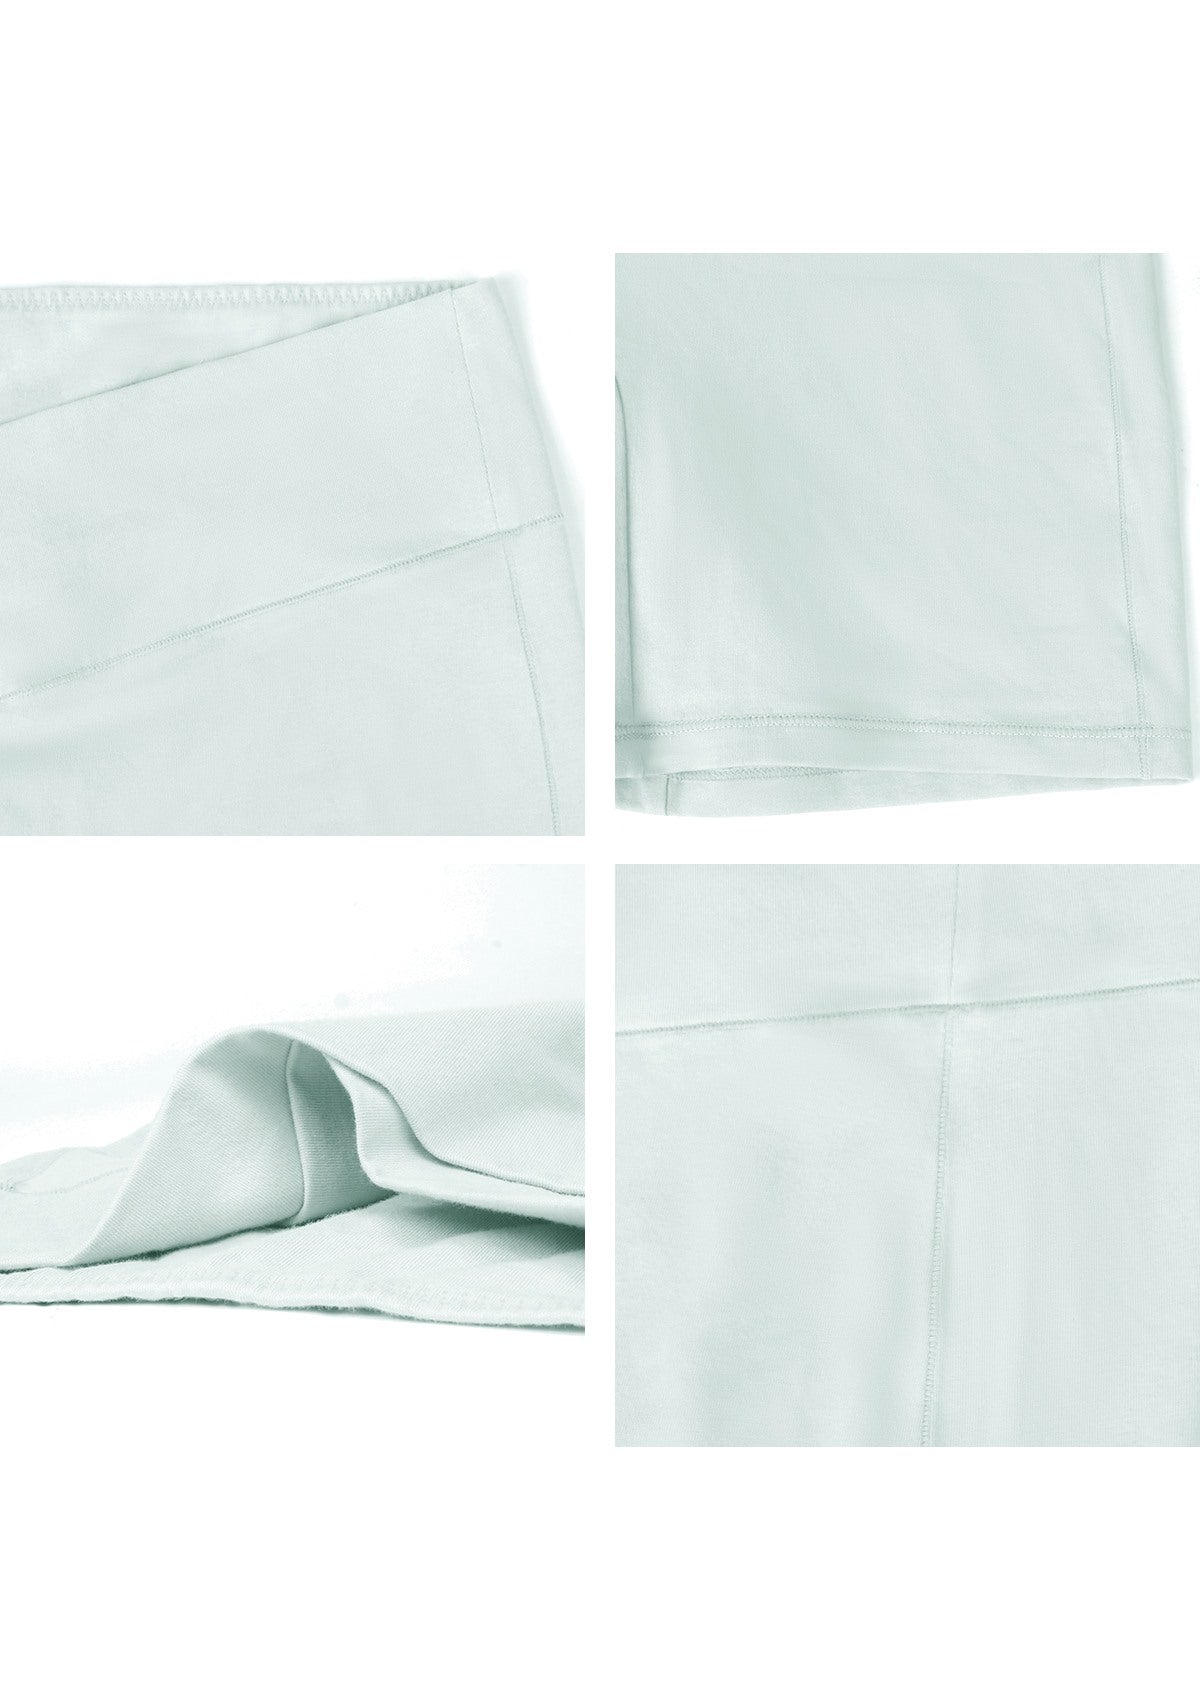 All-Day Comfort High-Rise Cotton Boyshorts Underwear 3 Pack - XL / Black+Beige+Green